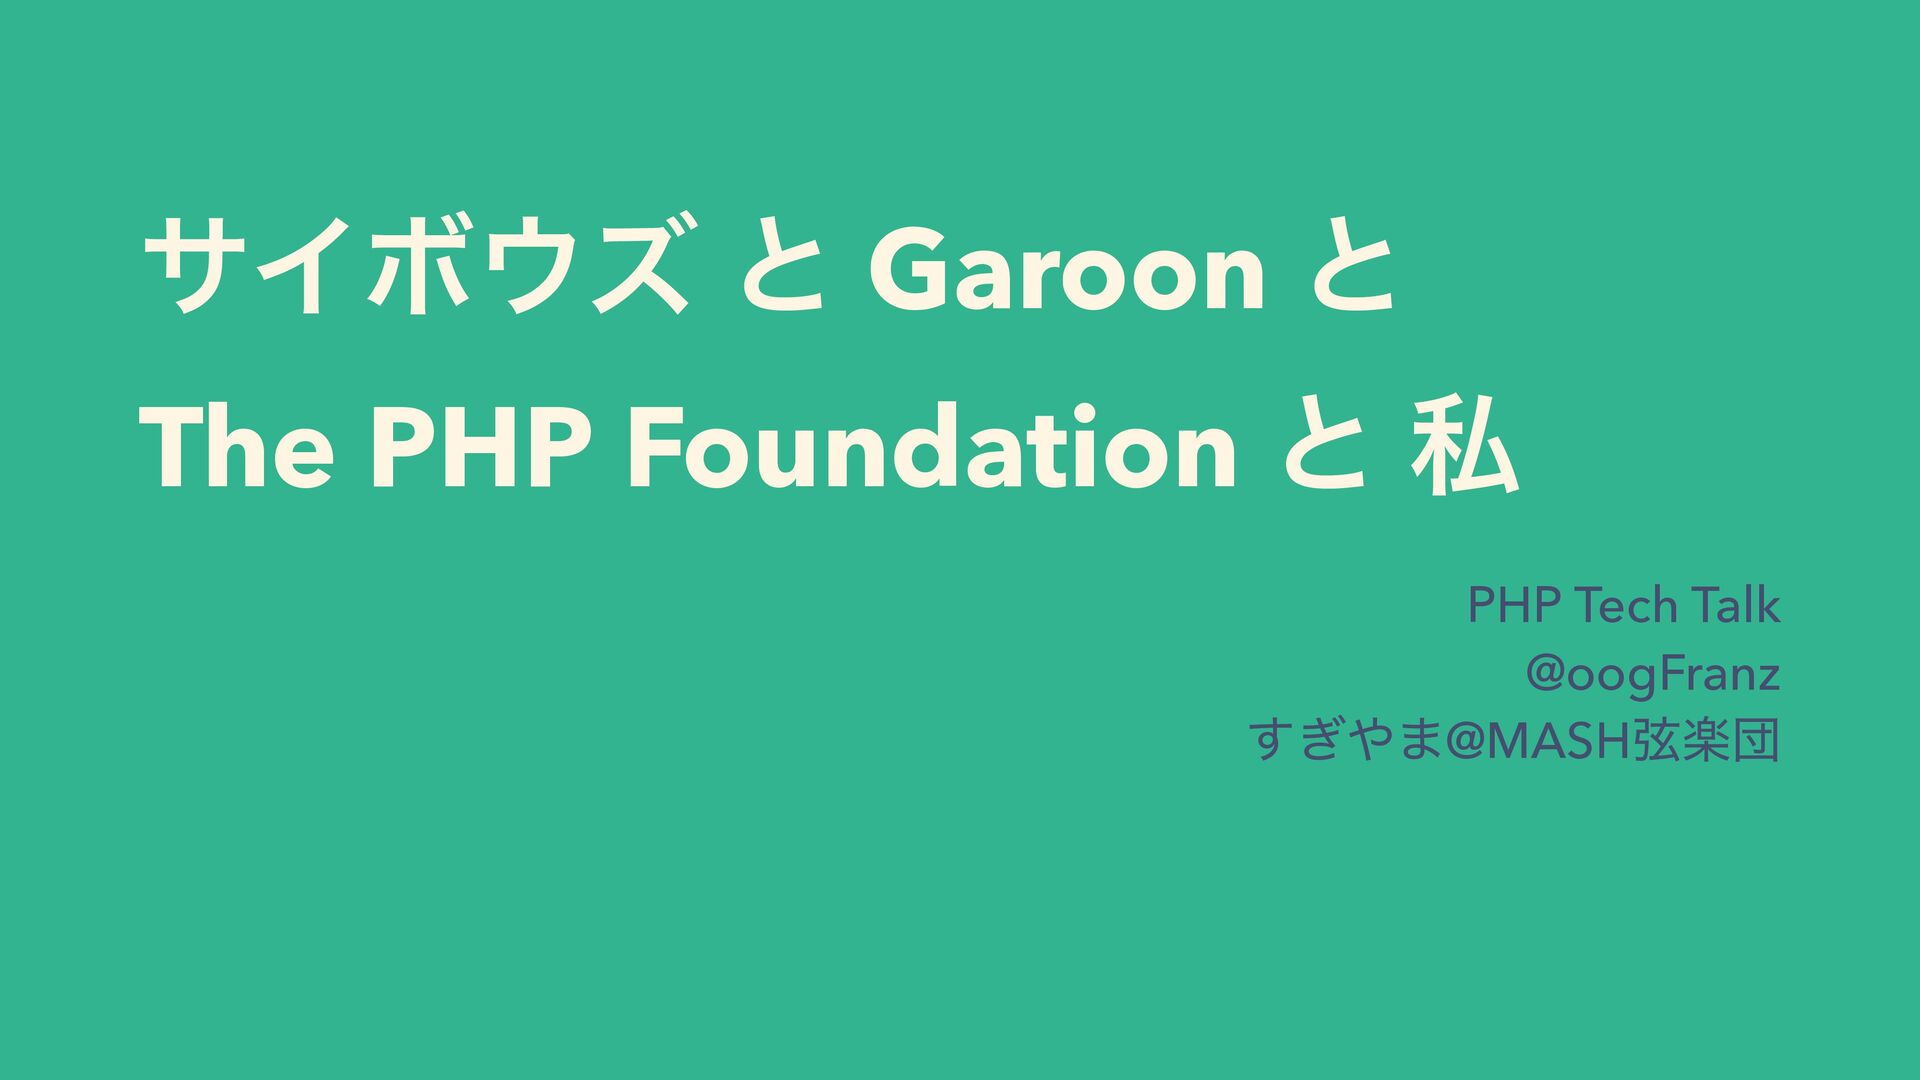 Slide Top: サイボウズ と Garoon と  The PHP Foundation と 私 / Cybozu and Garoon and The PHP Foundation and me